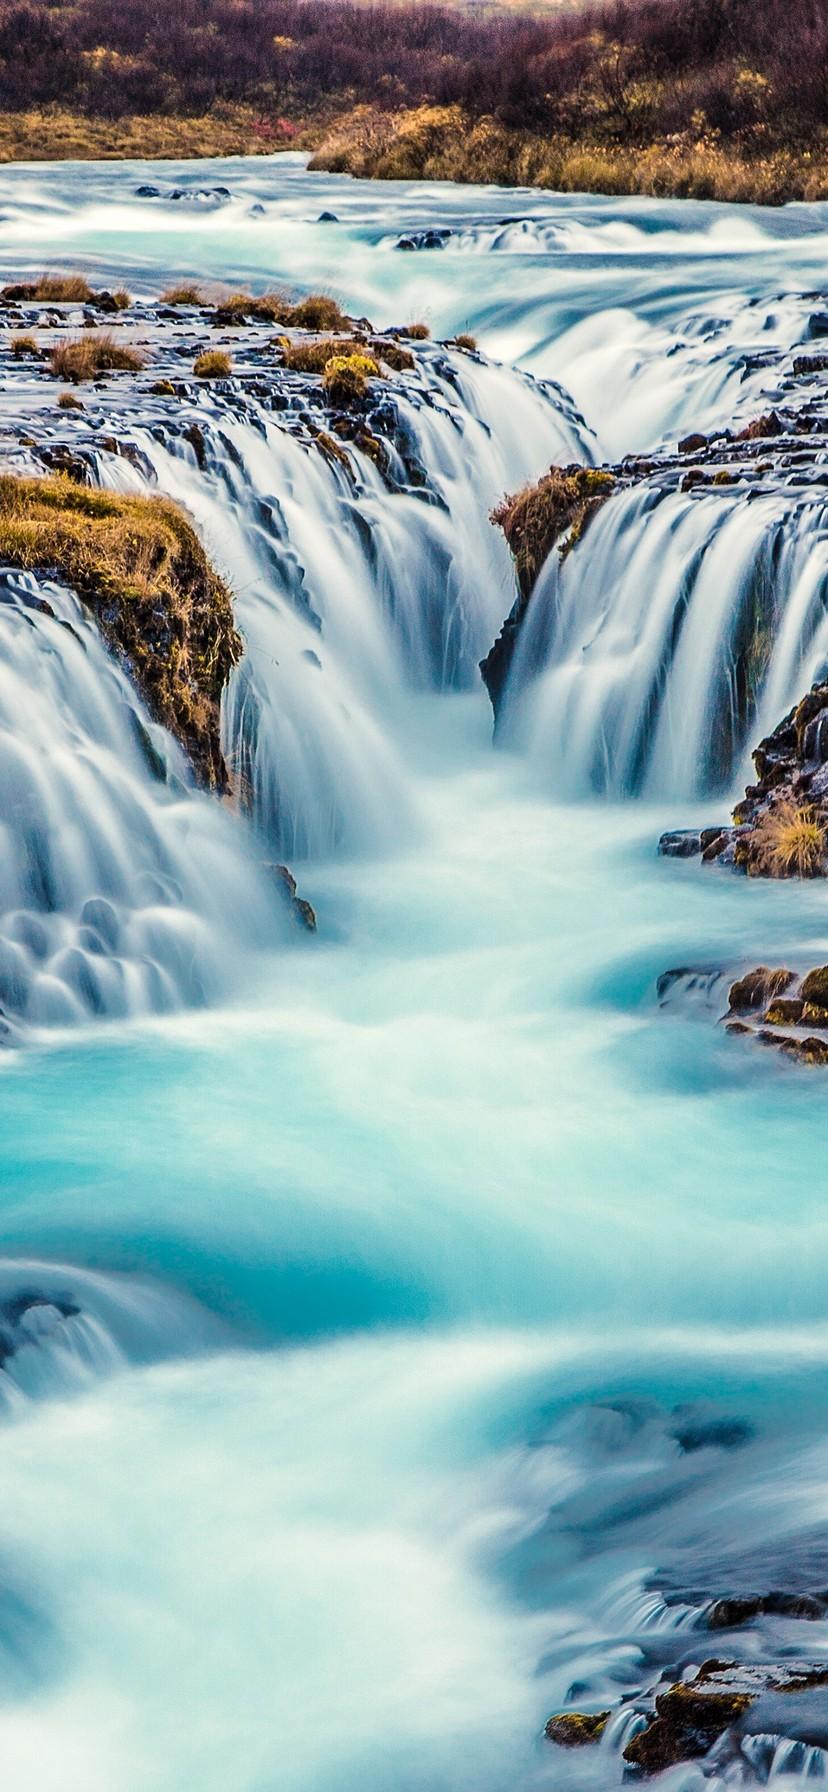 True Nature Small Waterfall Wallpaper iPhone Xr 5. Grab iPhone